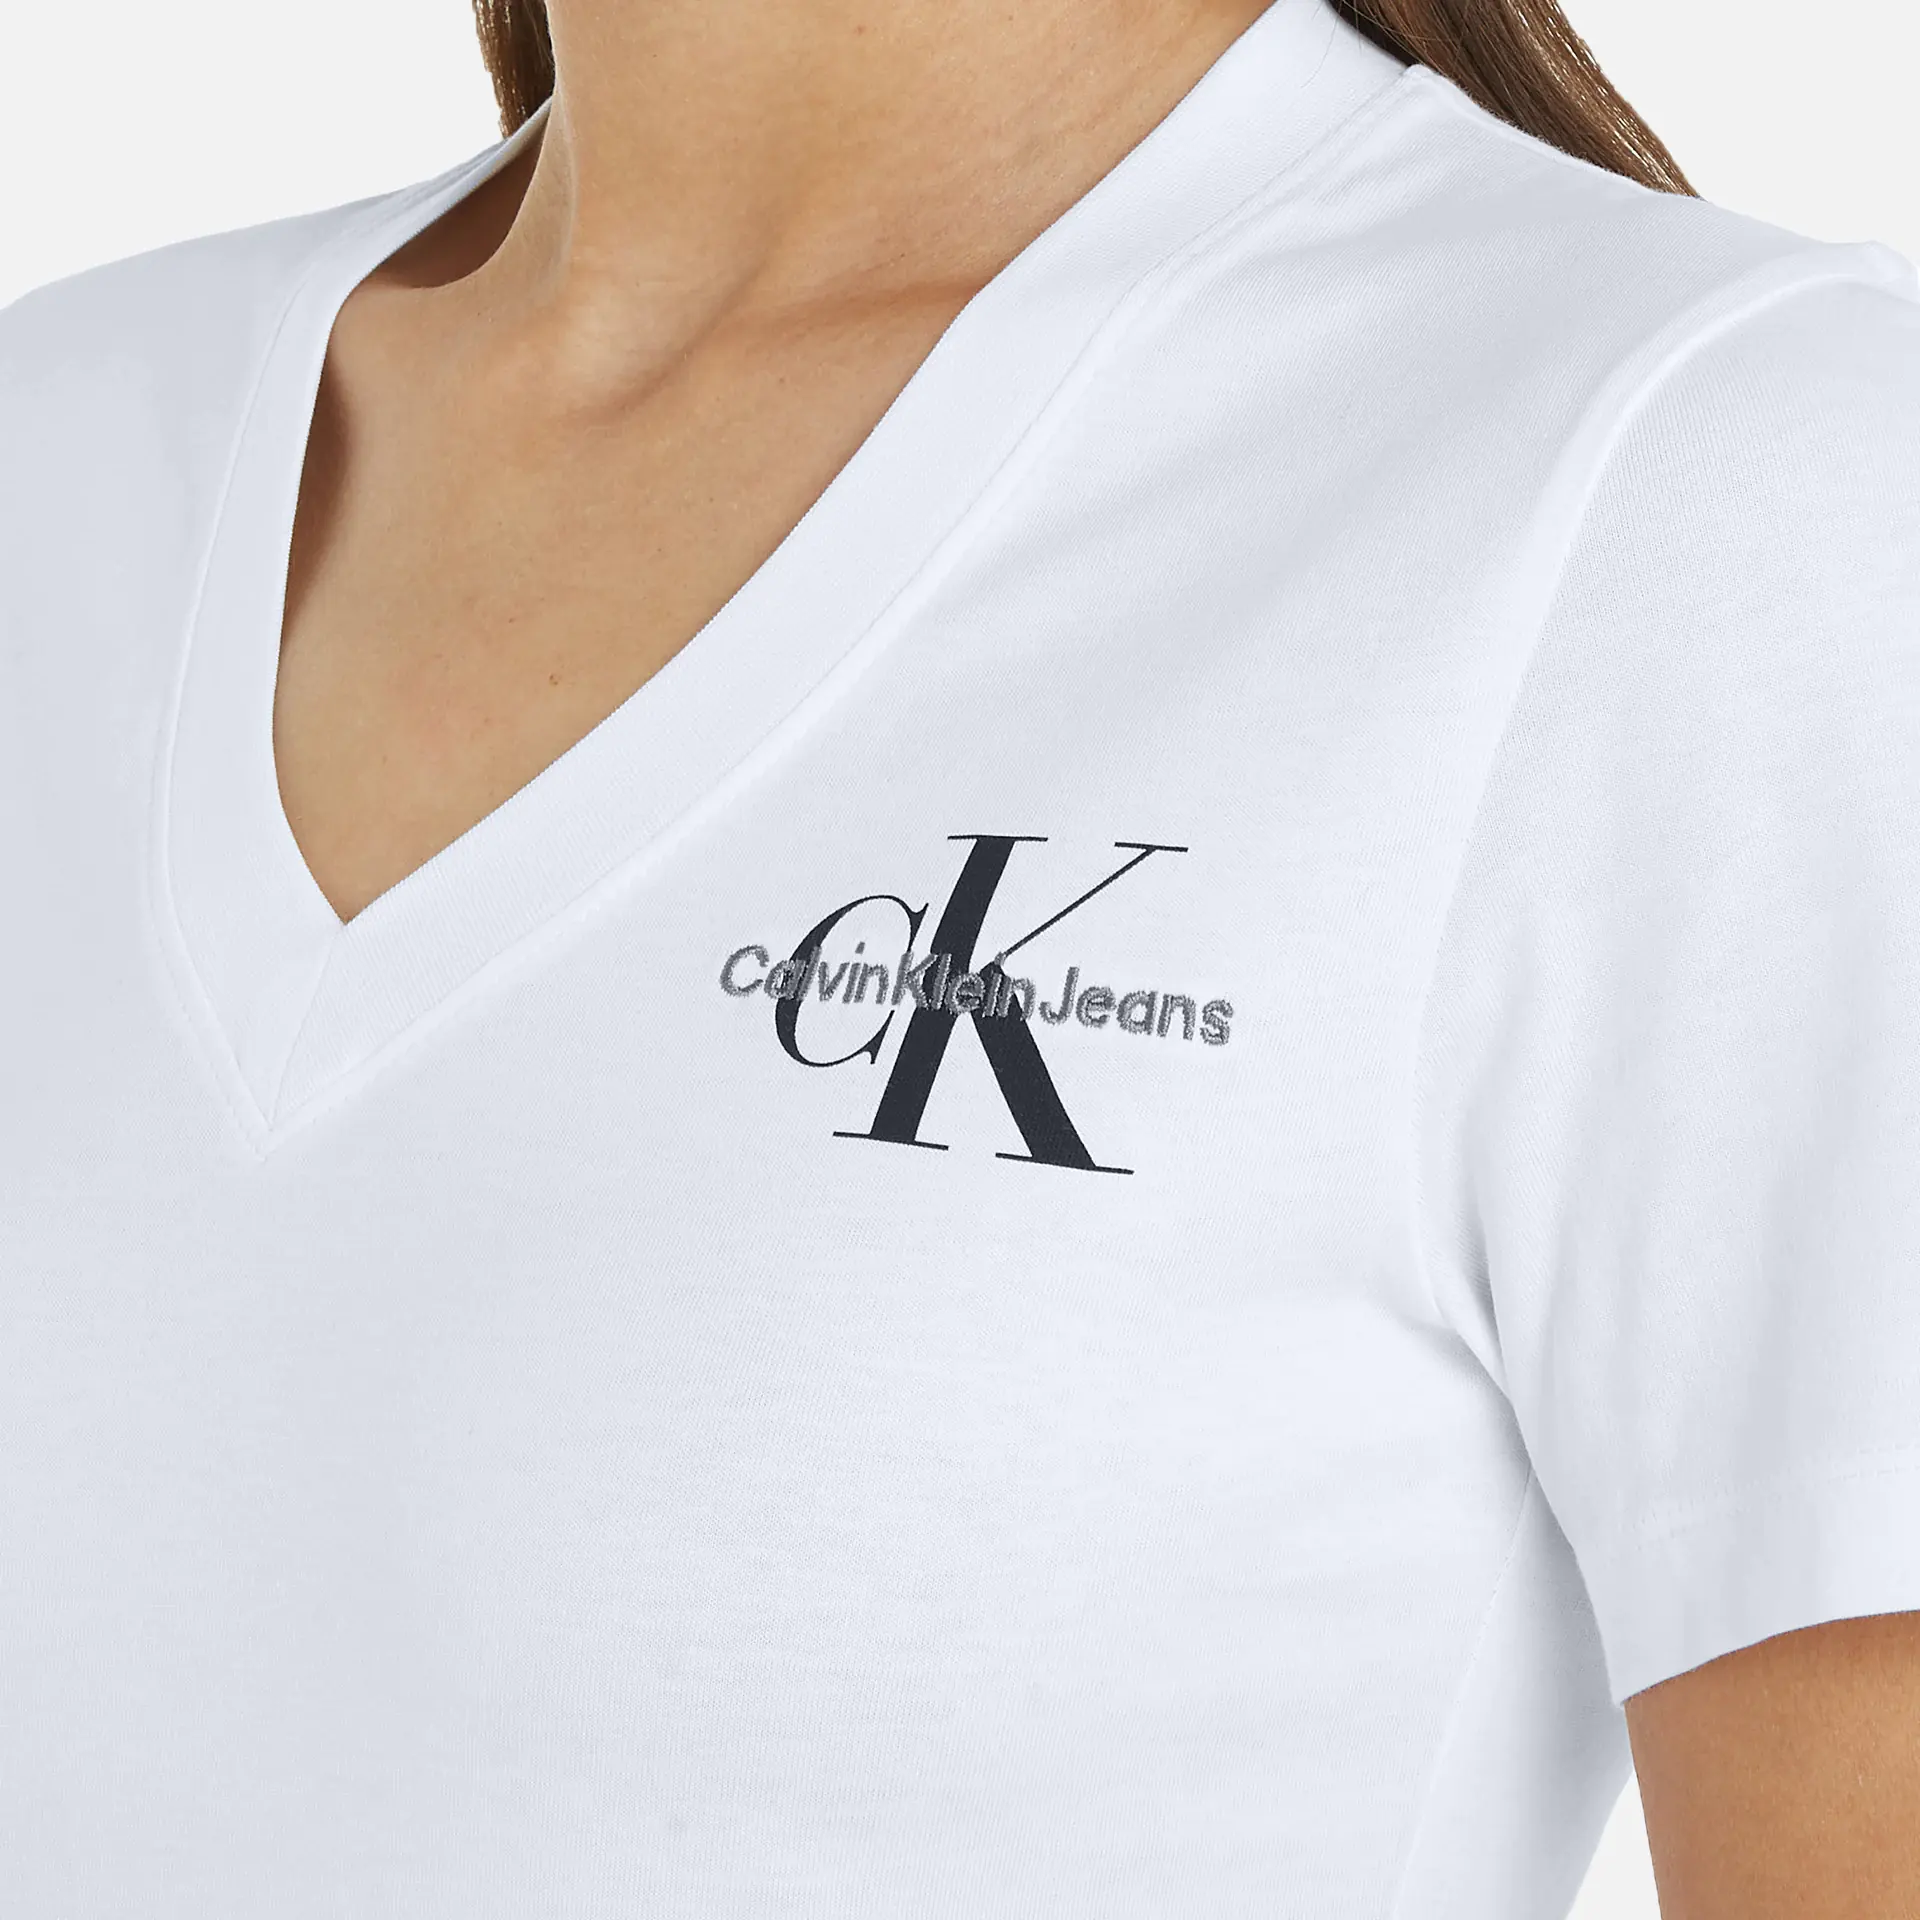 Calvin Klein Jeans Monologo T-Shirt Bright White V-Neck Slim